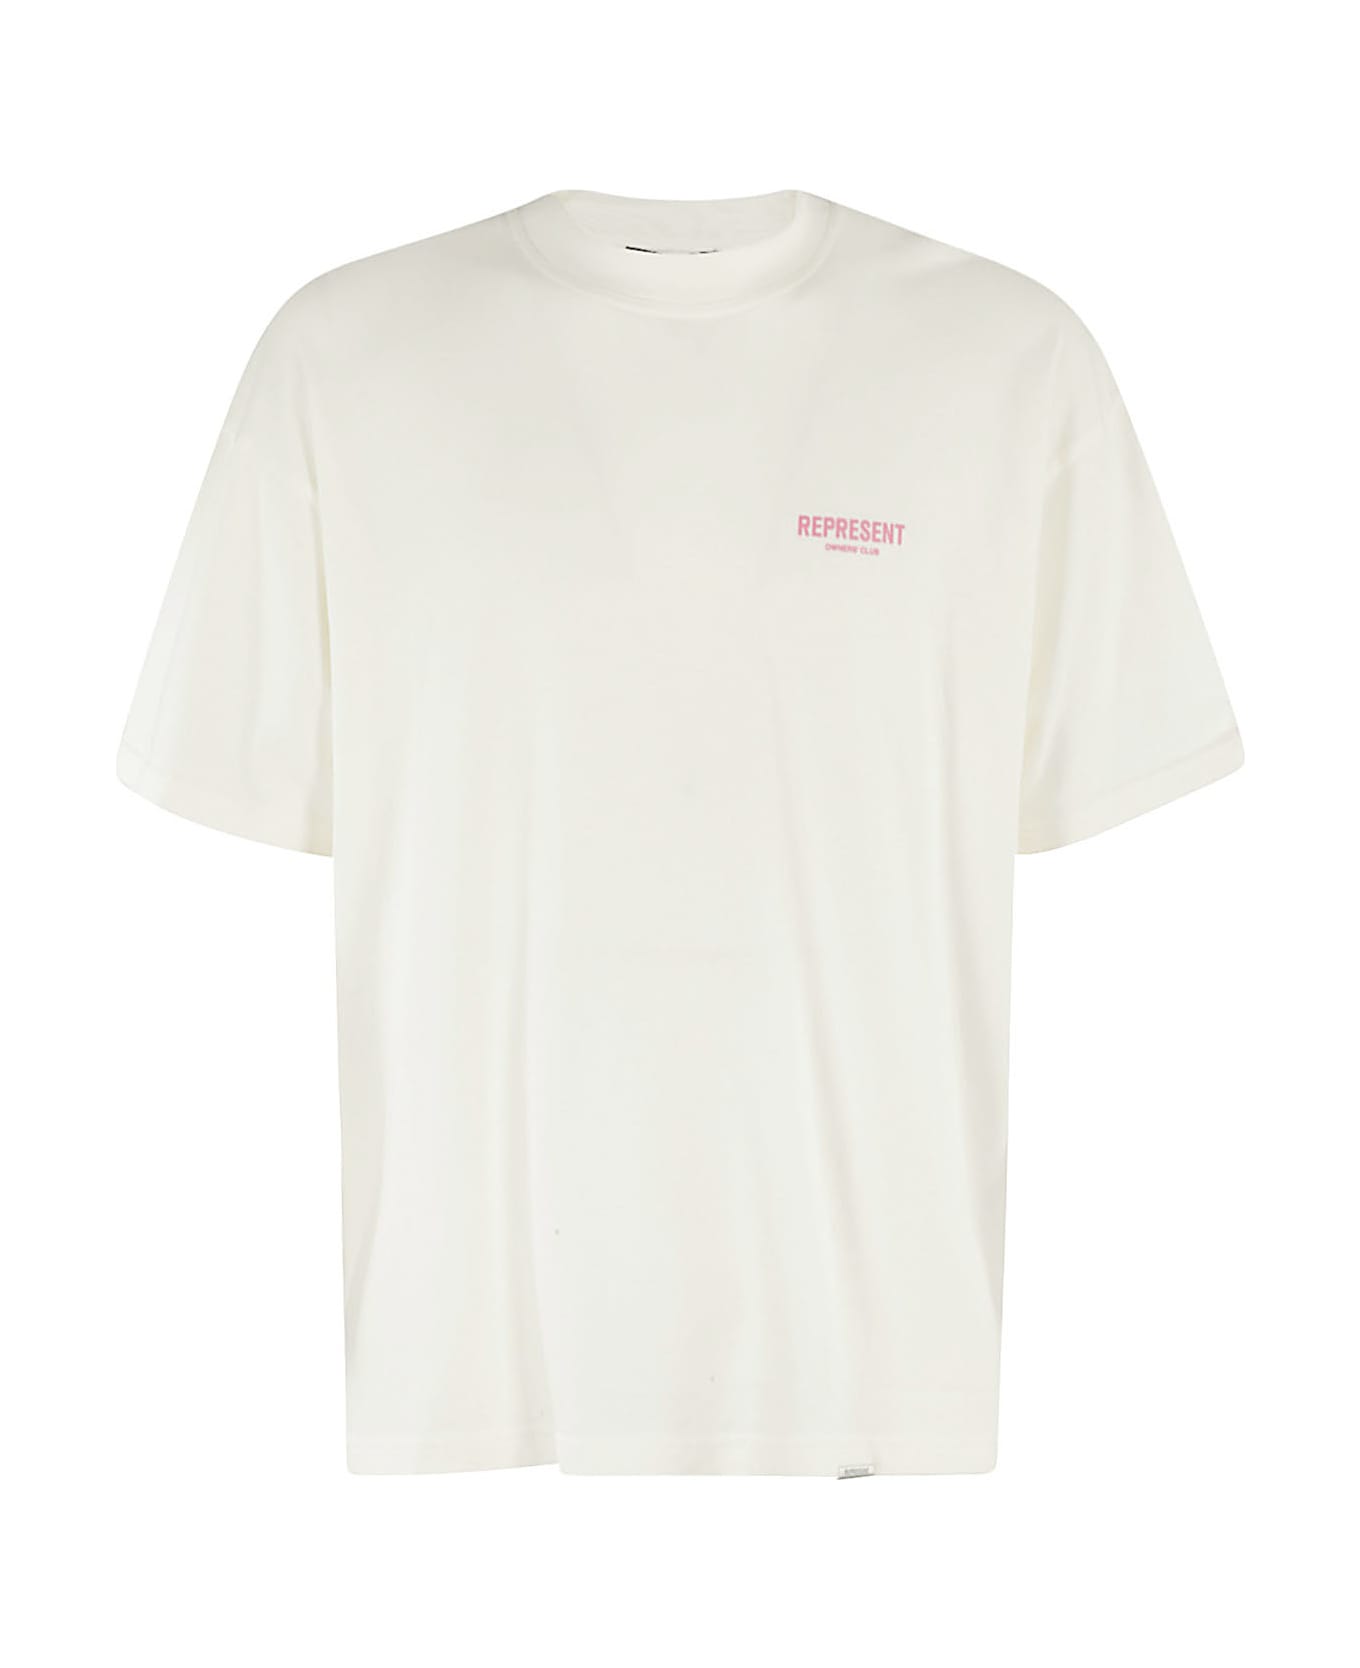 REPRESENT Owners Club T Shirt - White Bubblegum Pink